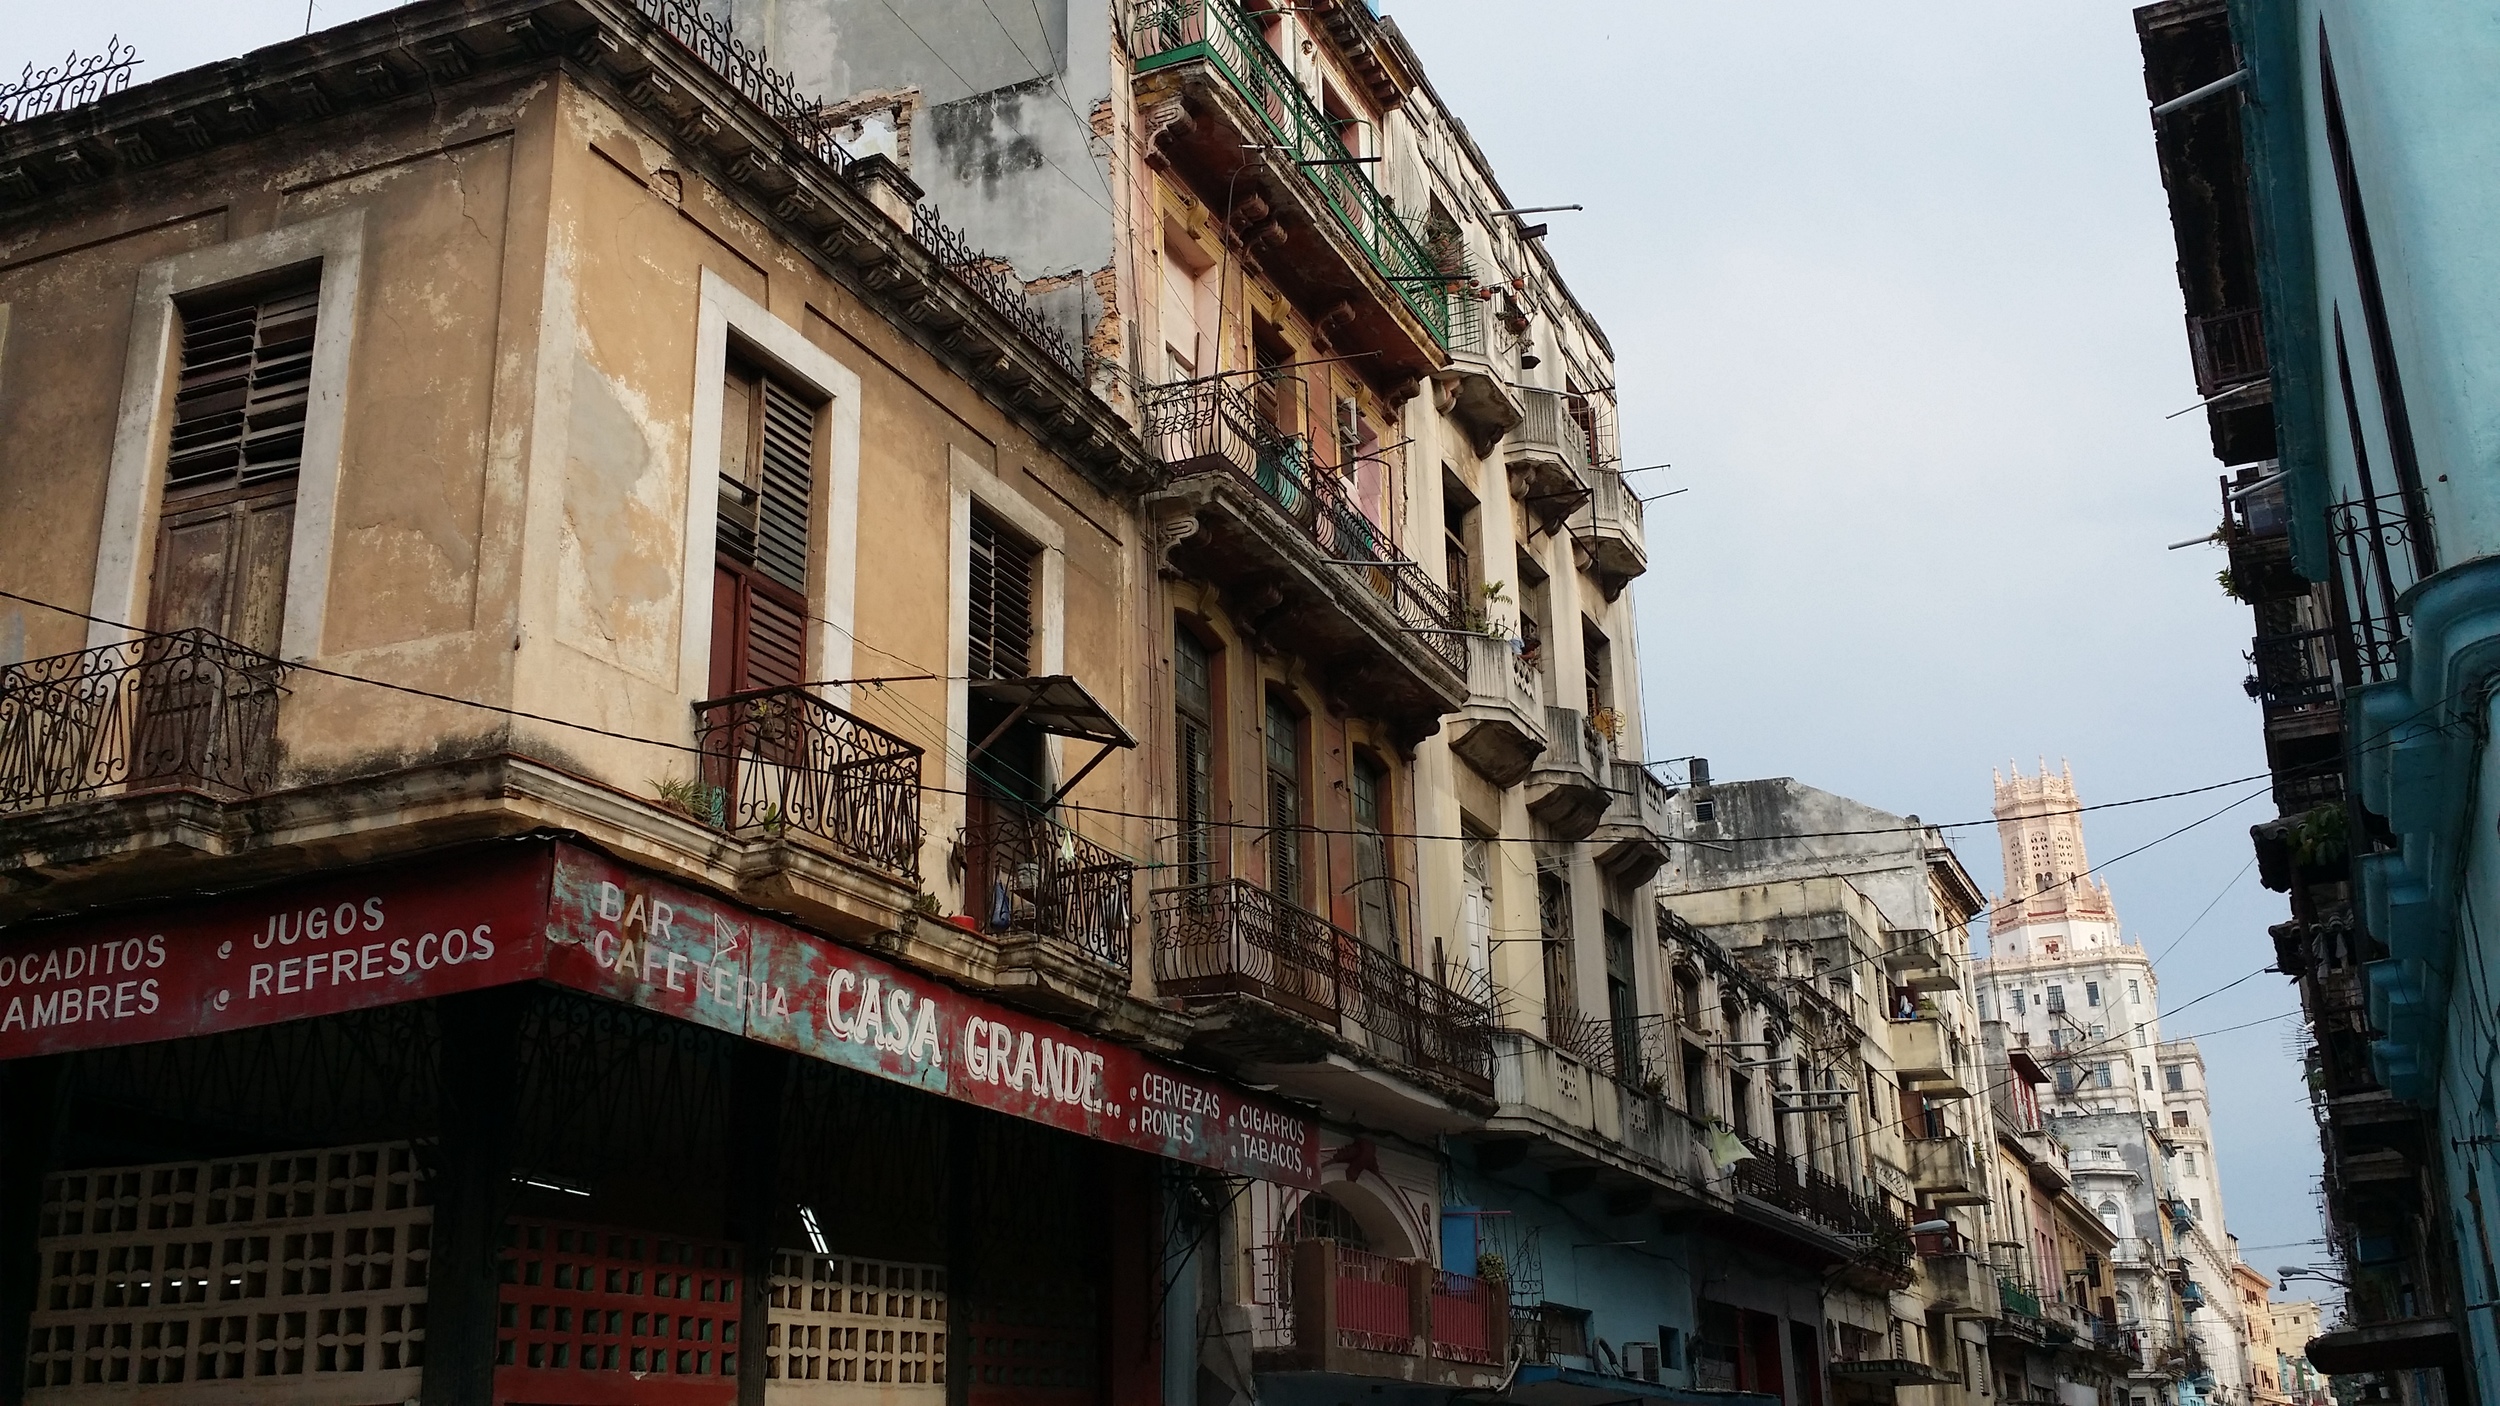 Old Havana (1).jpg